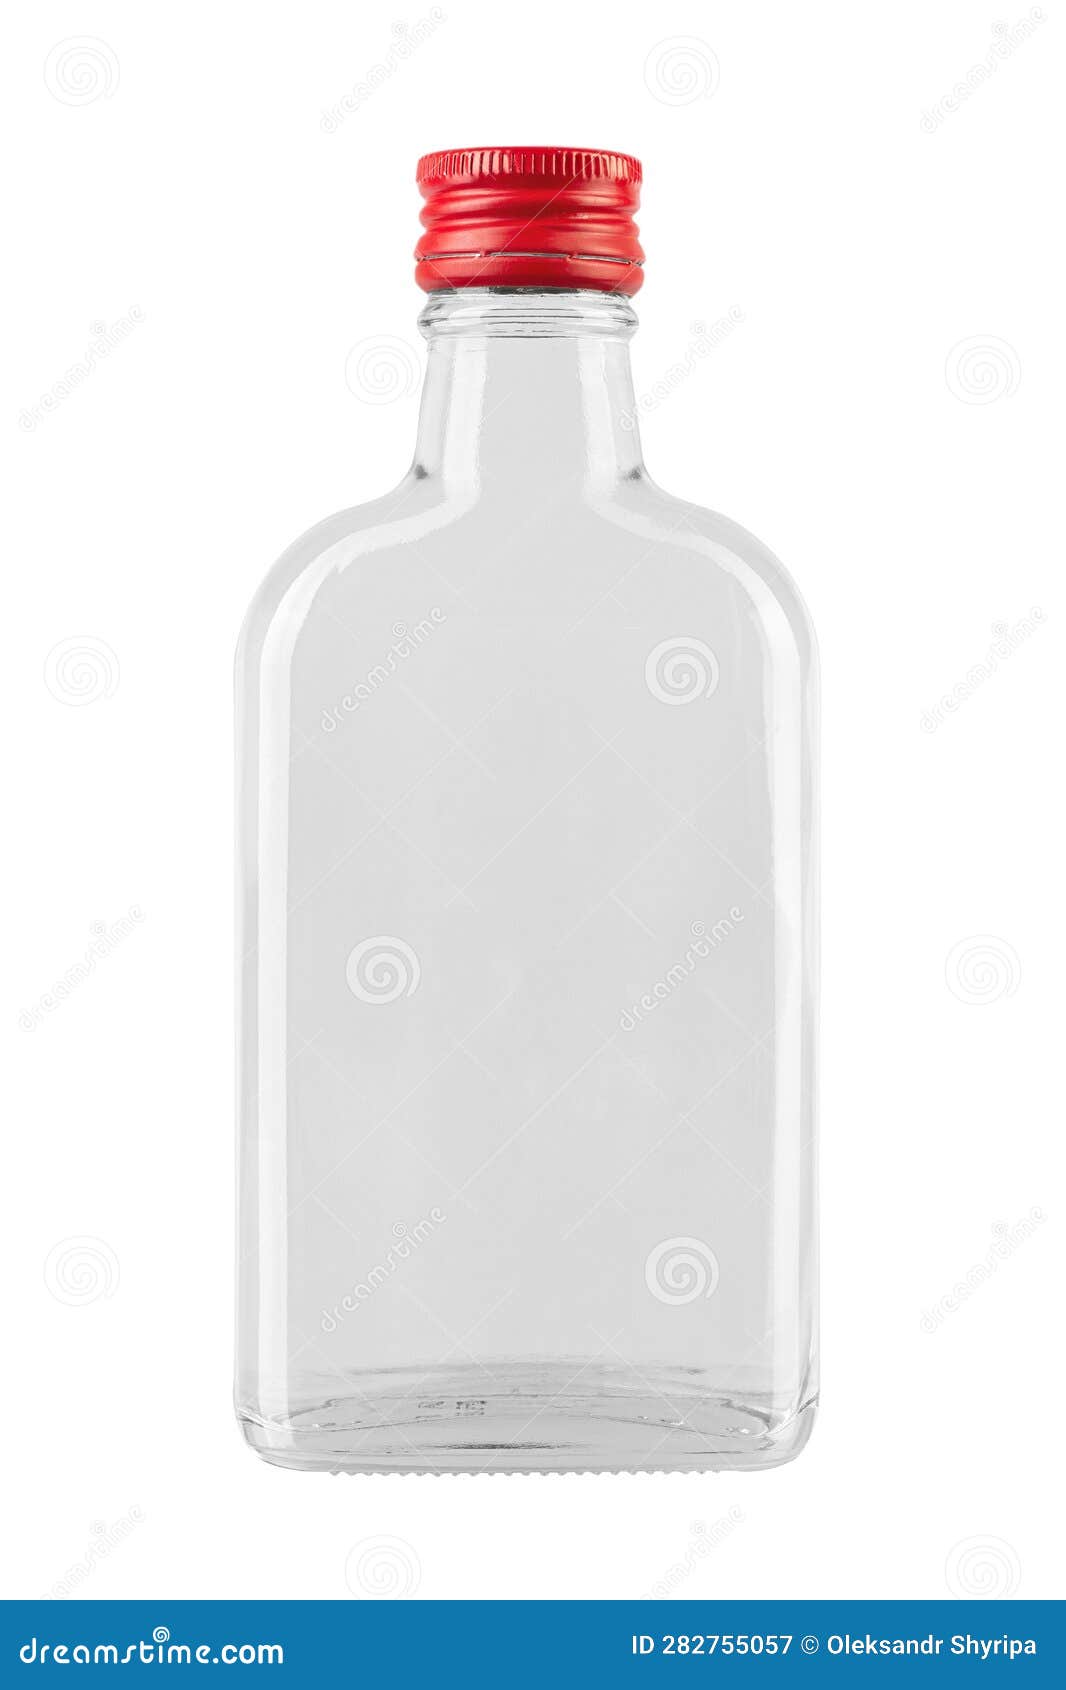 Bottle of Vodka in a Big Ice Cube Stock Image - Image of beverage, bottle:  48223759